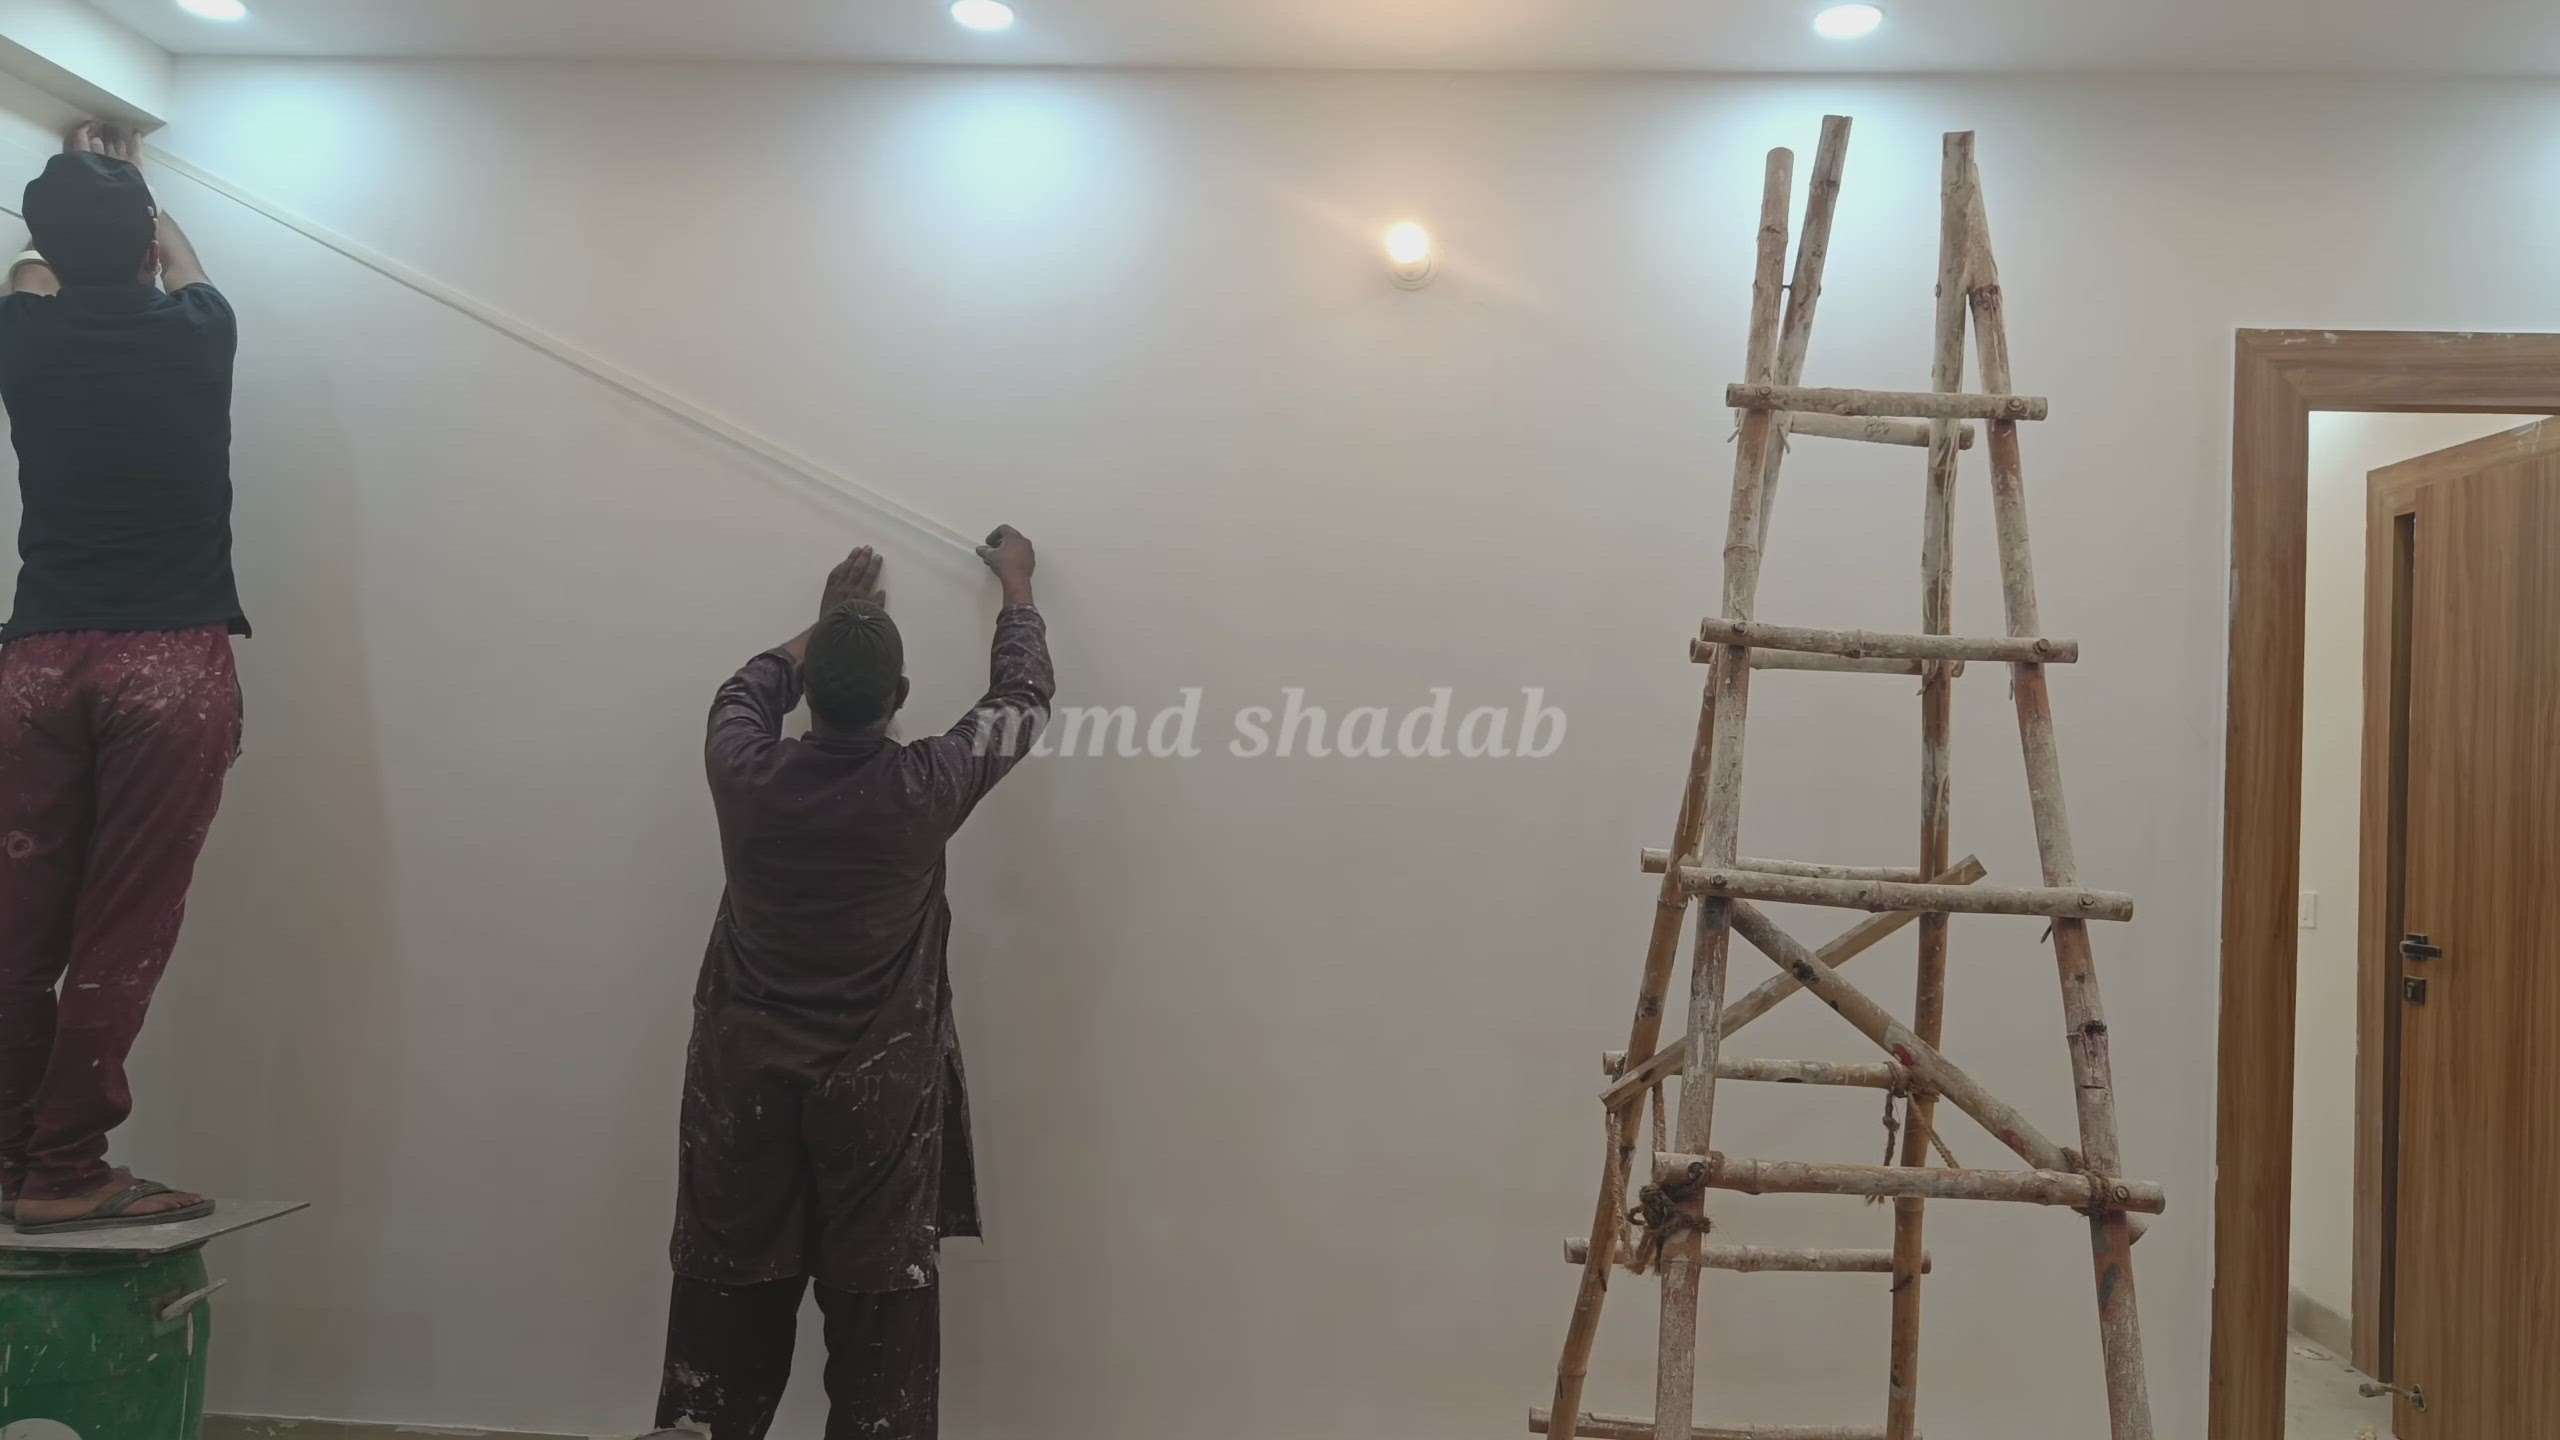 geumatric wall painting design ideas for drawing room | #mmdshadab #koloapp #viralvideos